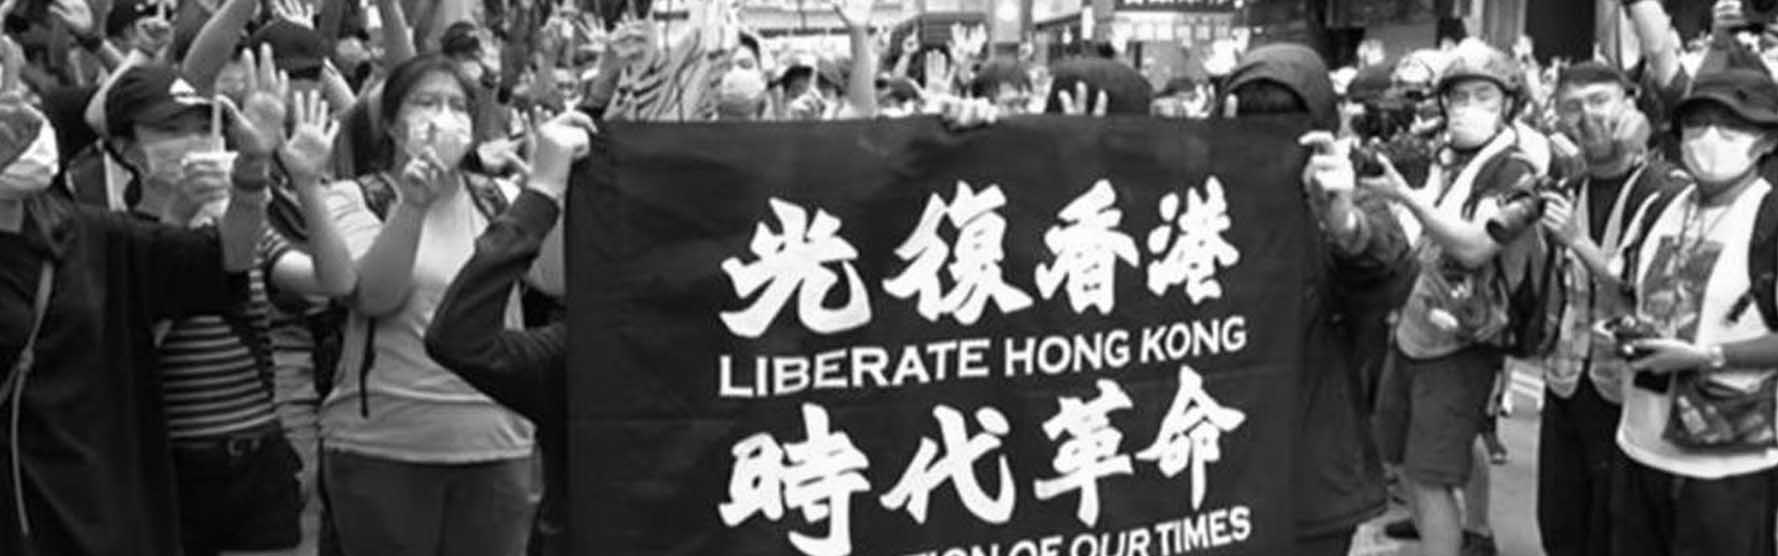 Editor's Choice: Hong Kong: Activists fear for future